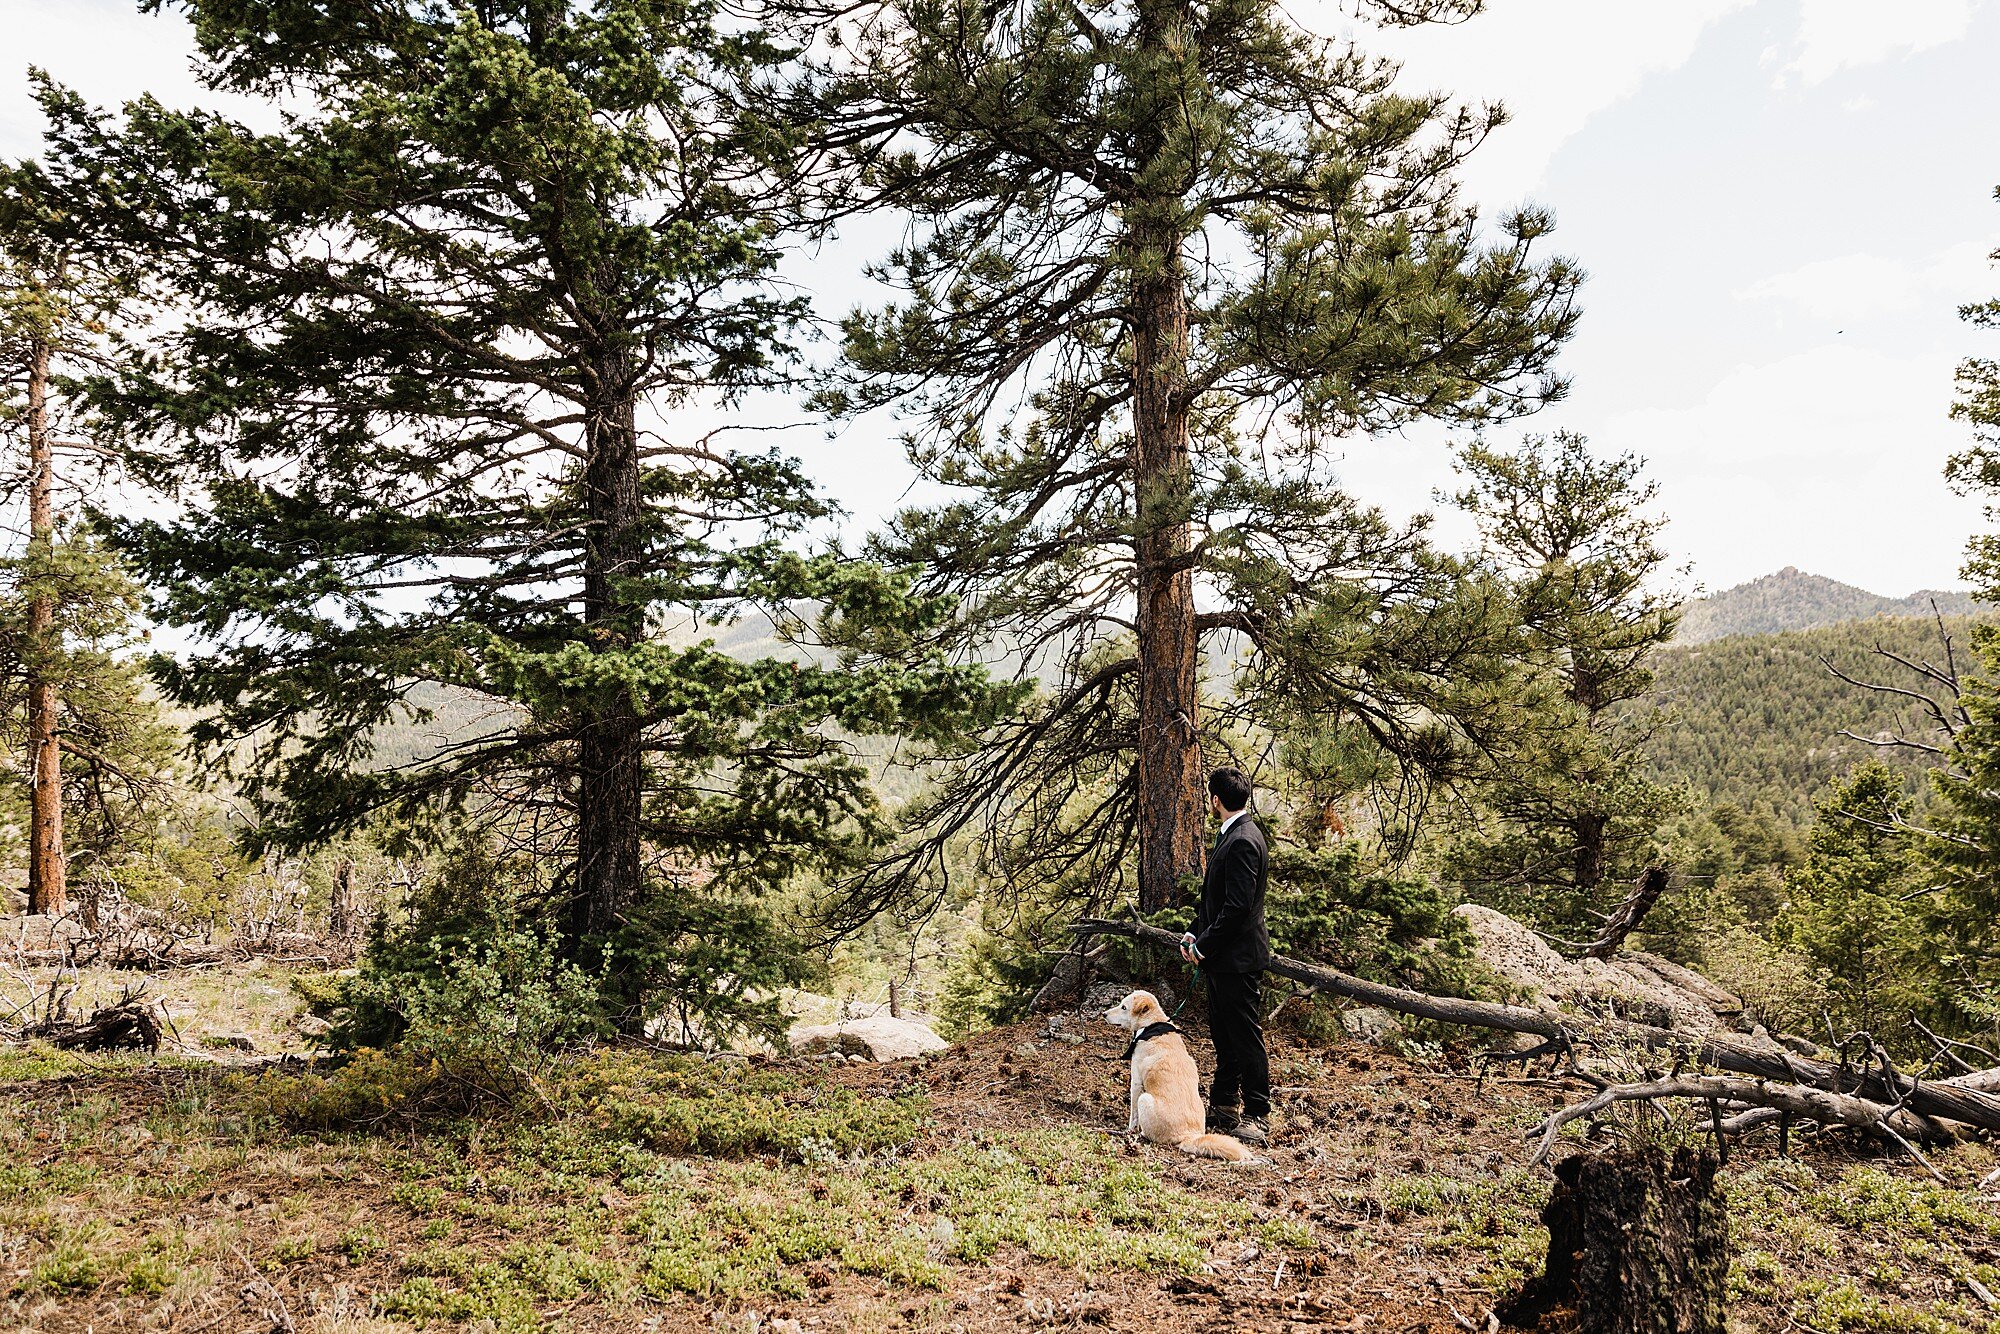 Rocky Mountain National Park Elopement | Colorado Elopement Photographer | Vow of the Wild